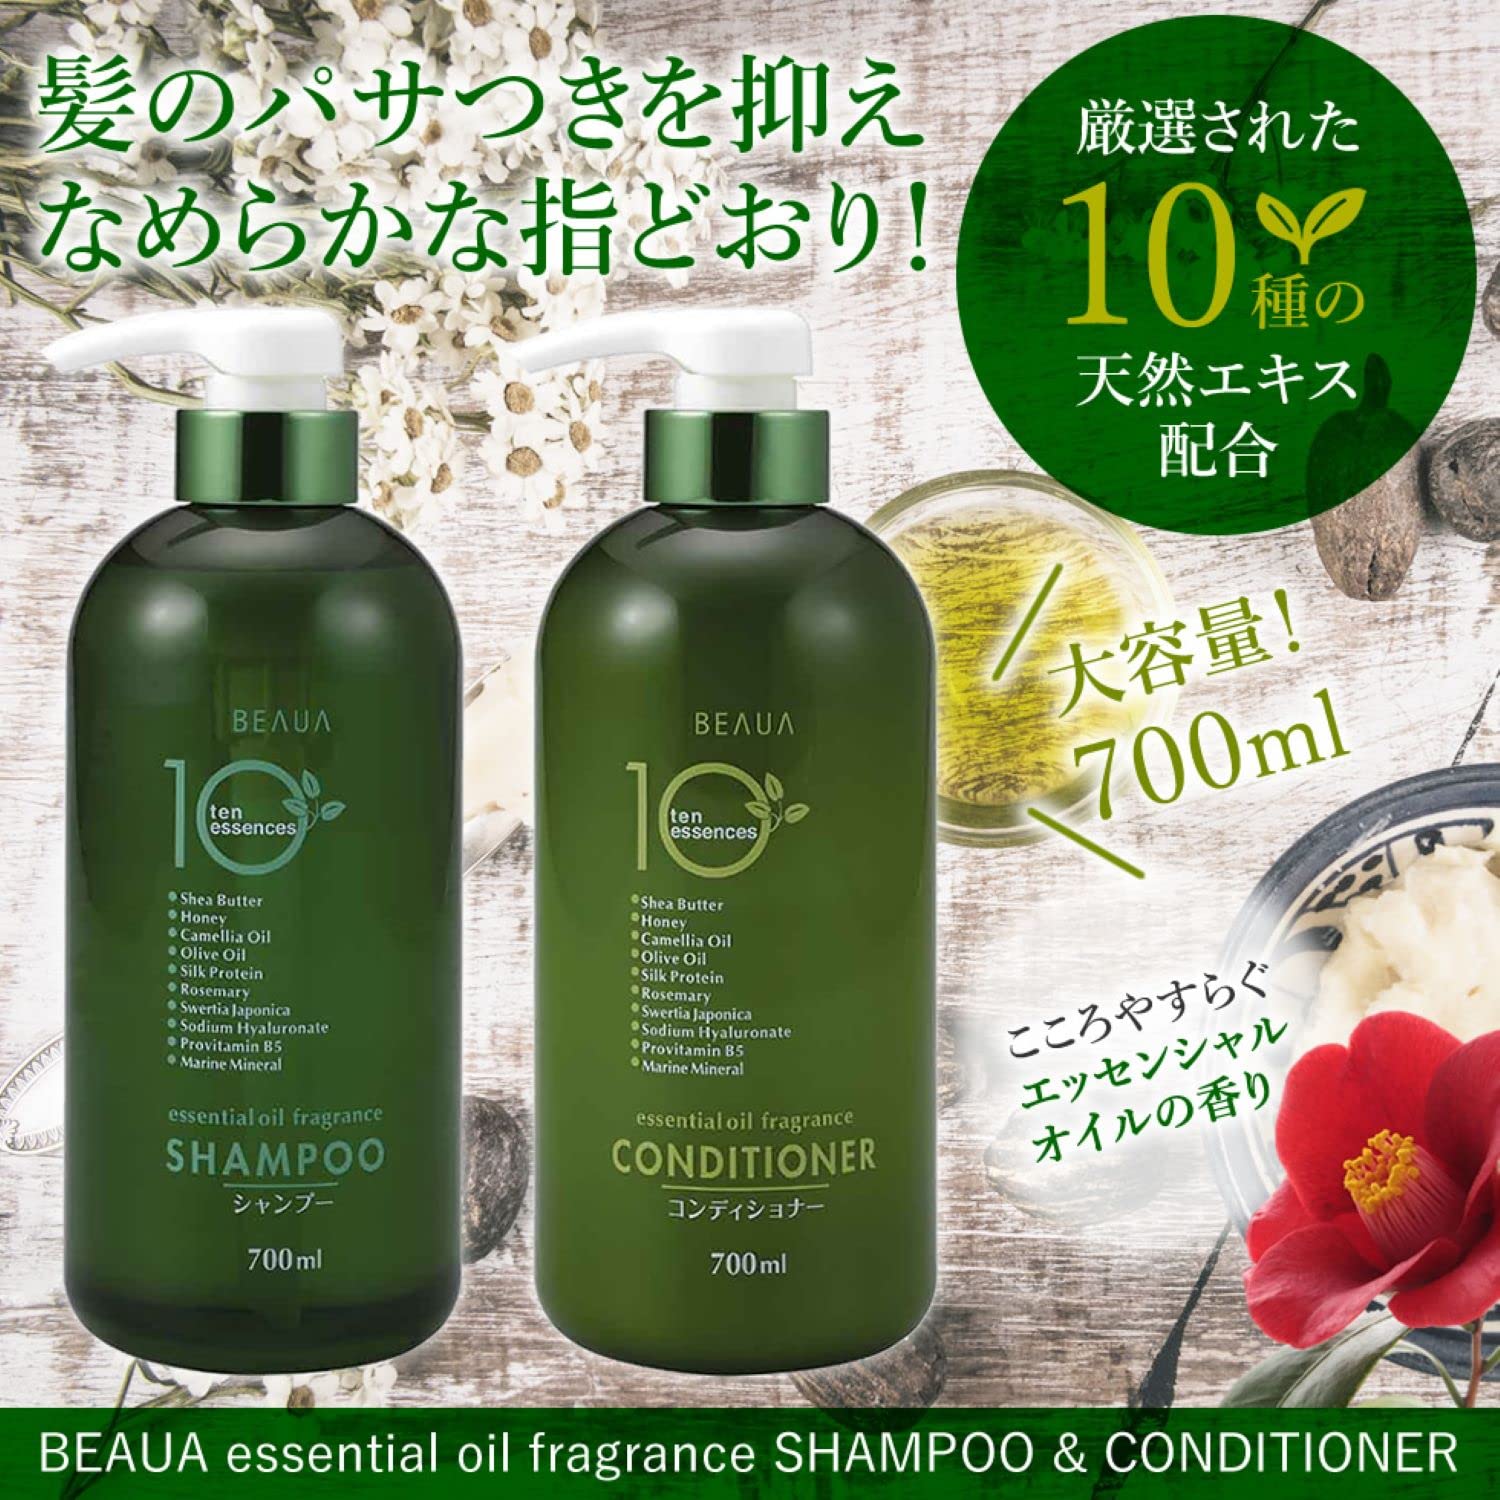 ten essences szampon